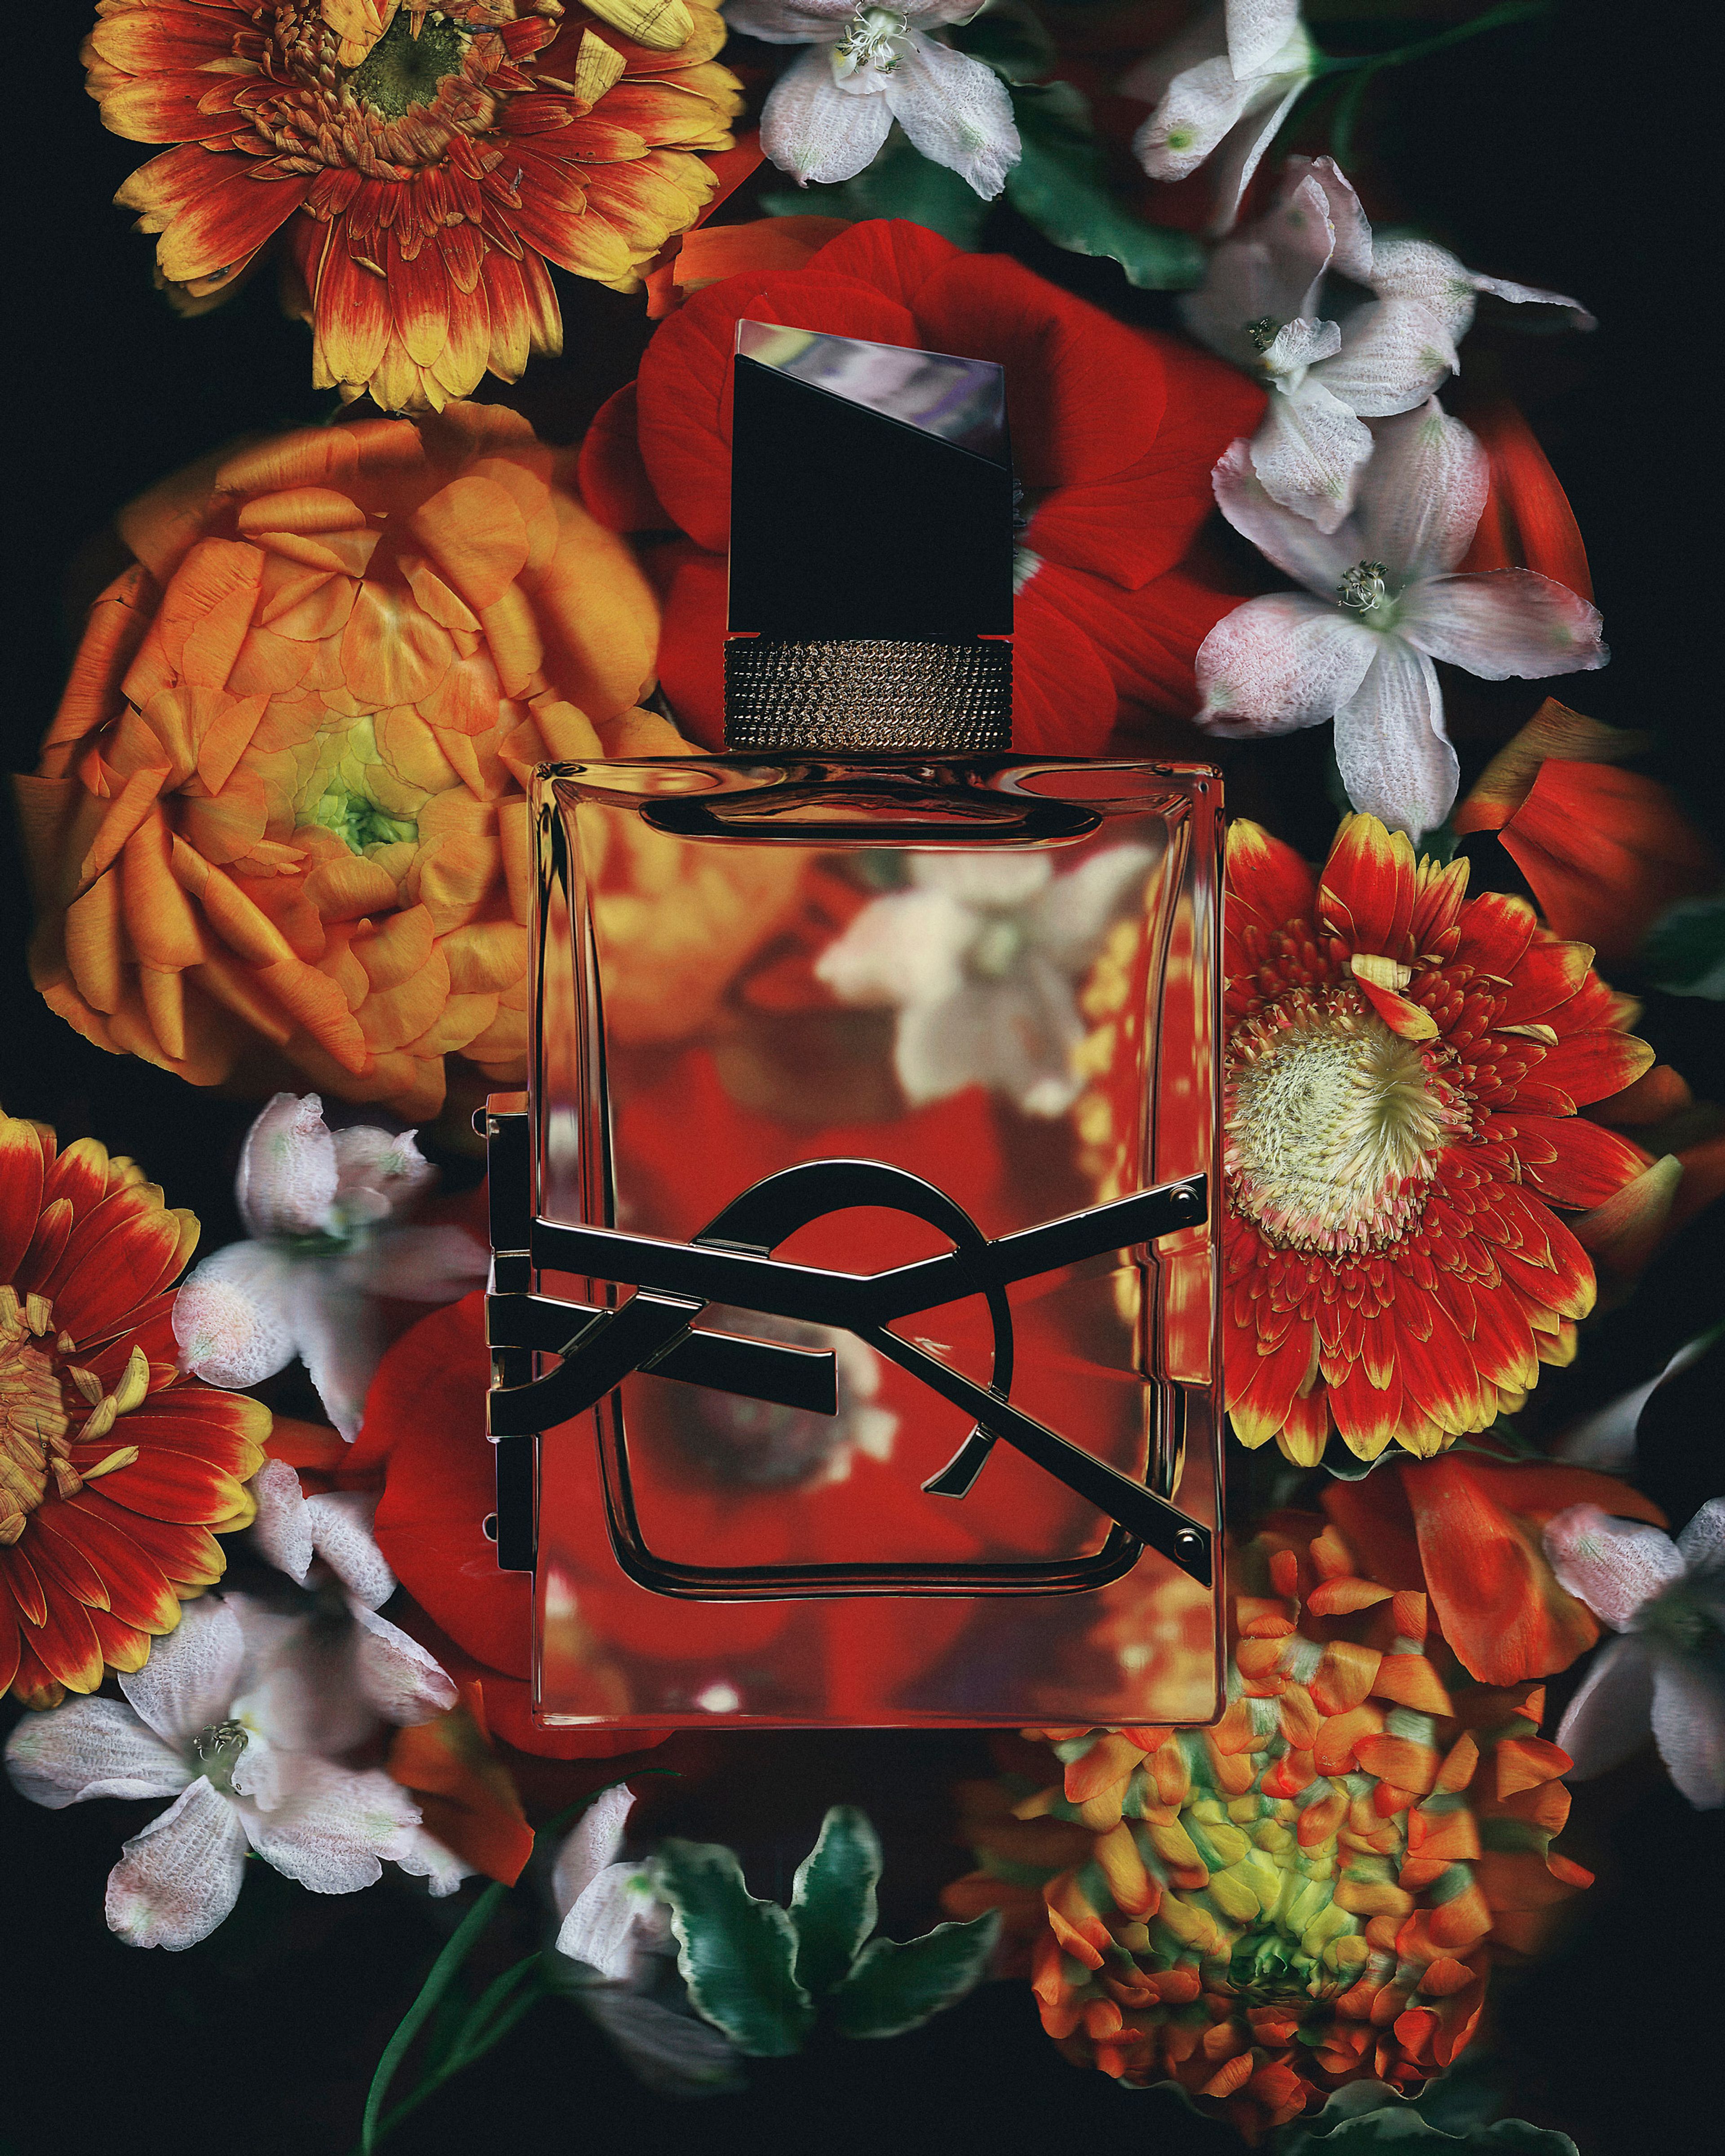 Fragrances, With Alice Tremblot - Romain Roucoules